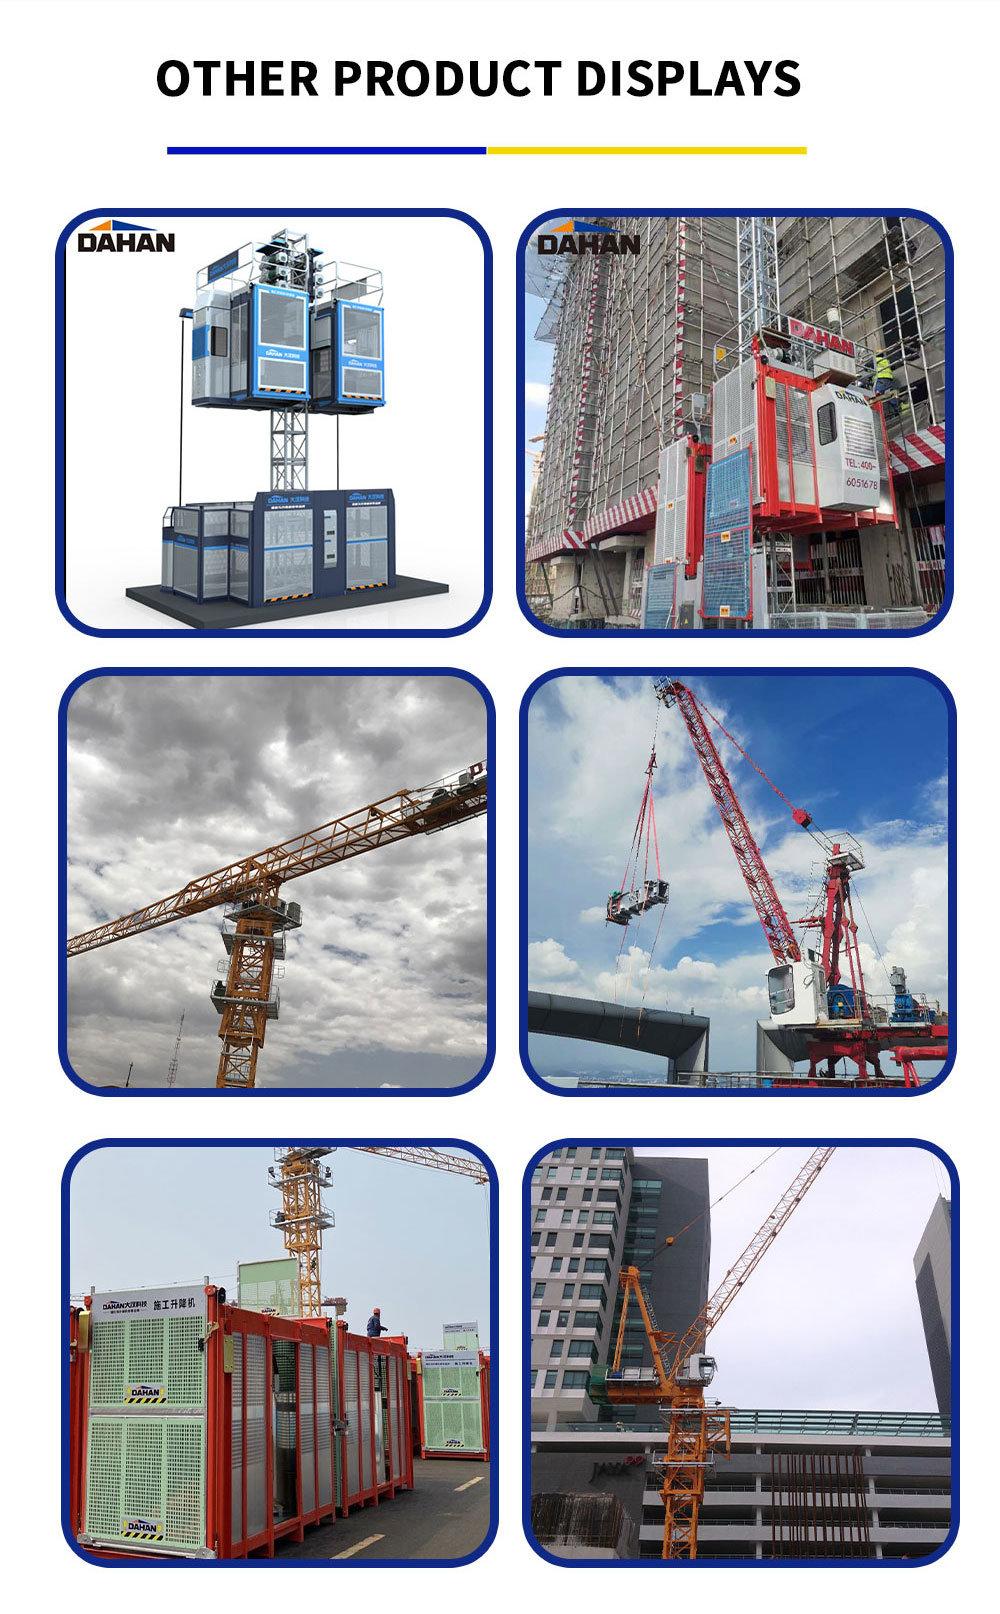 Chinese Manufacturer Dahan Provides 8 Ton Tower Crane